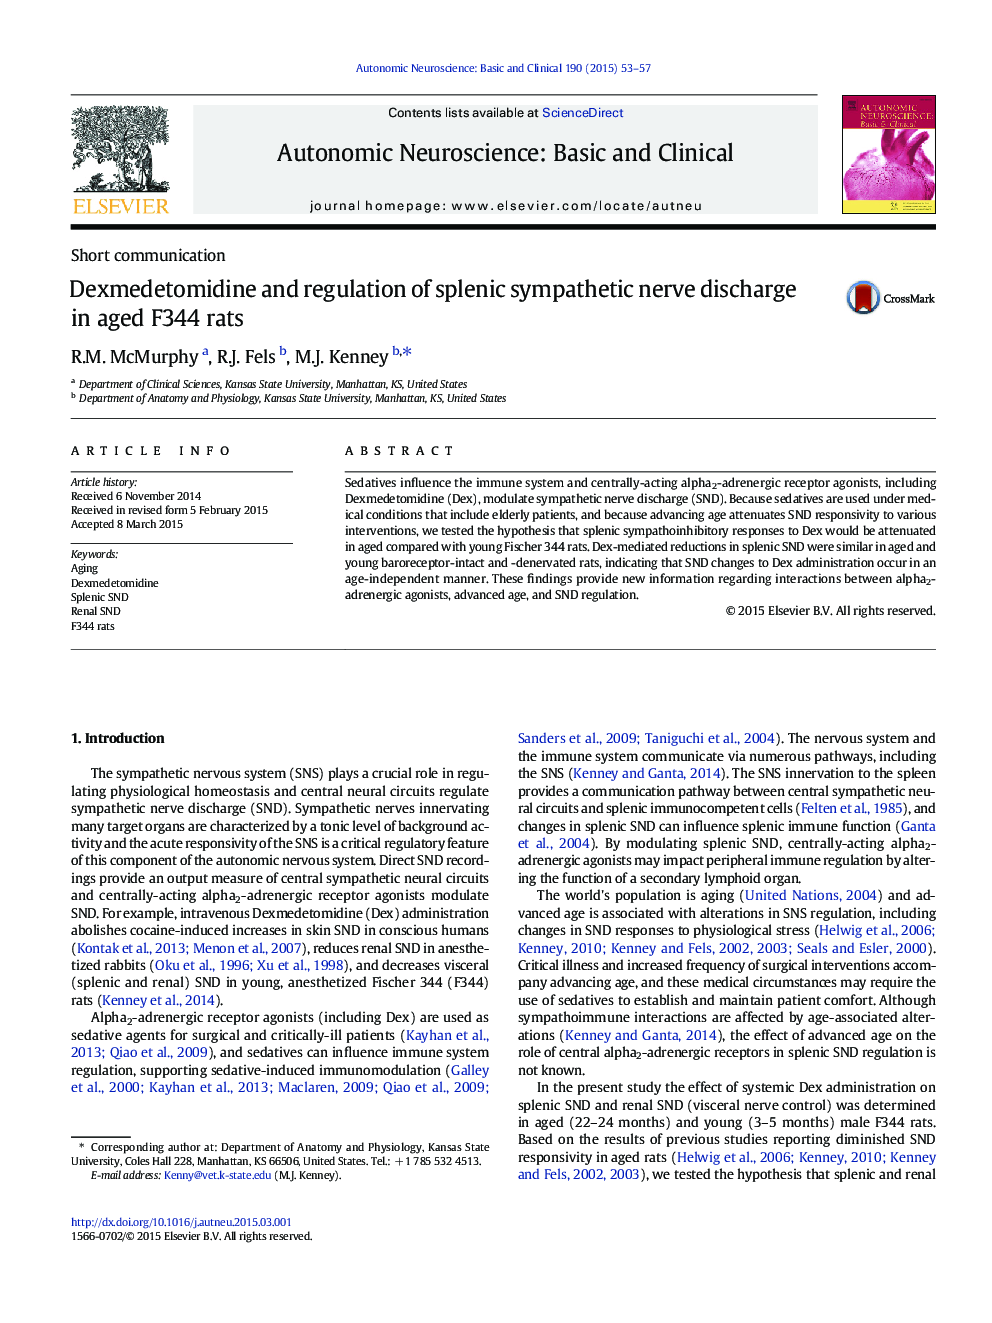 Dexmedetomidine and regulation of splenic sympathetic nerve discharge in aged F344 rats